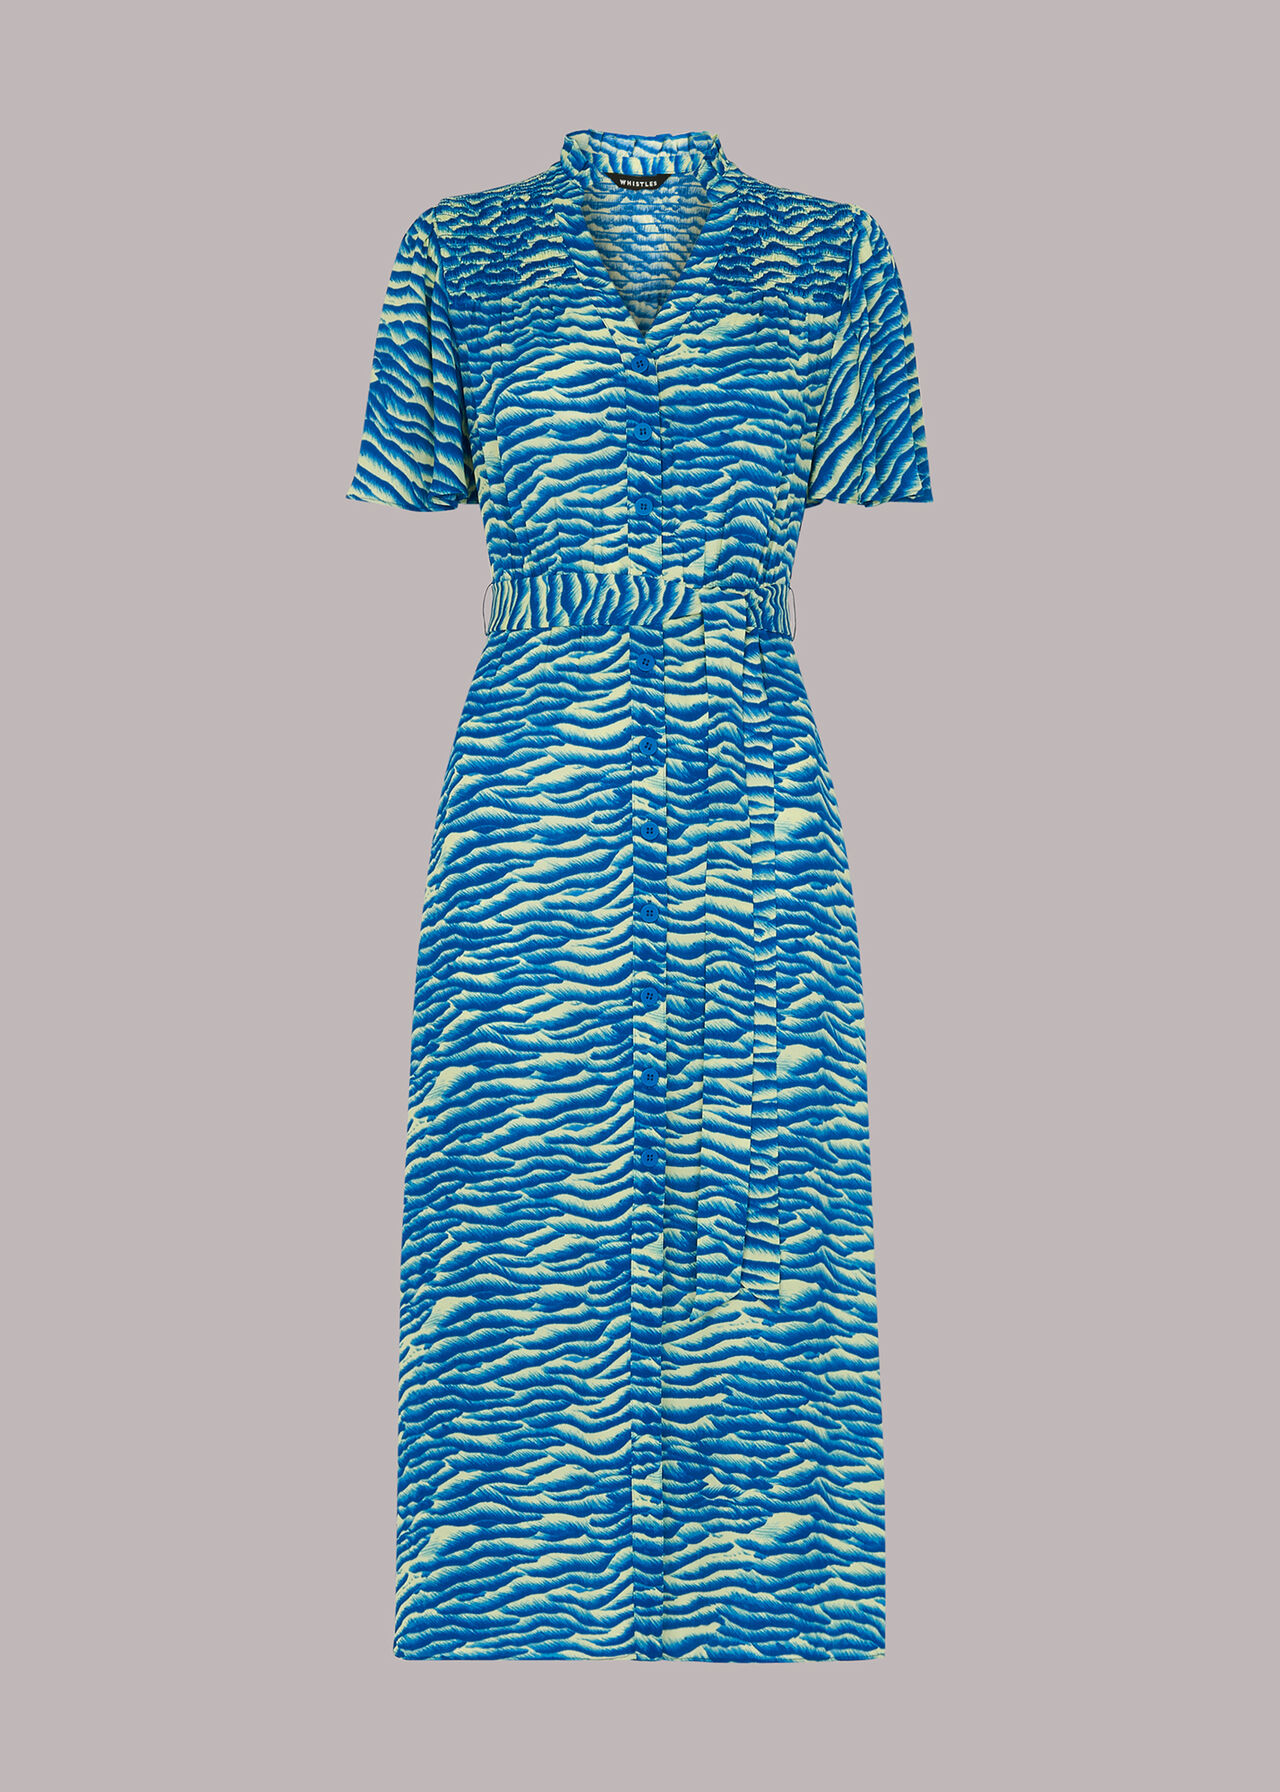 Seafoam Zebra Midi Dress